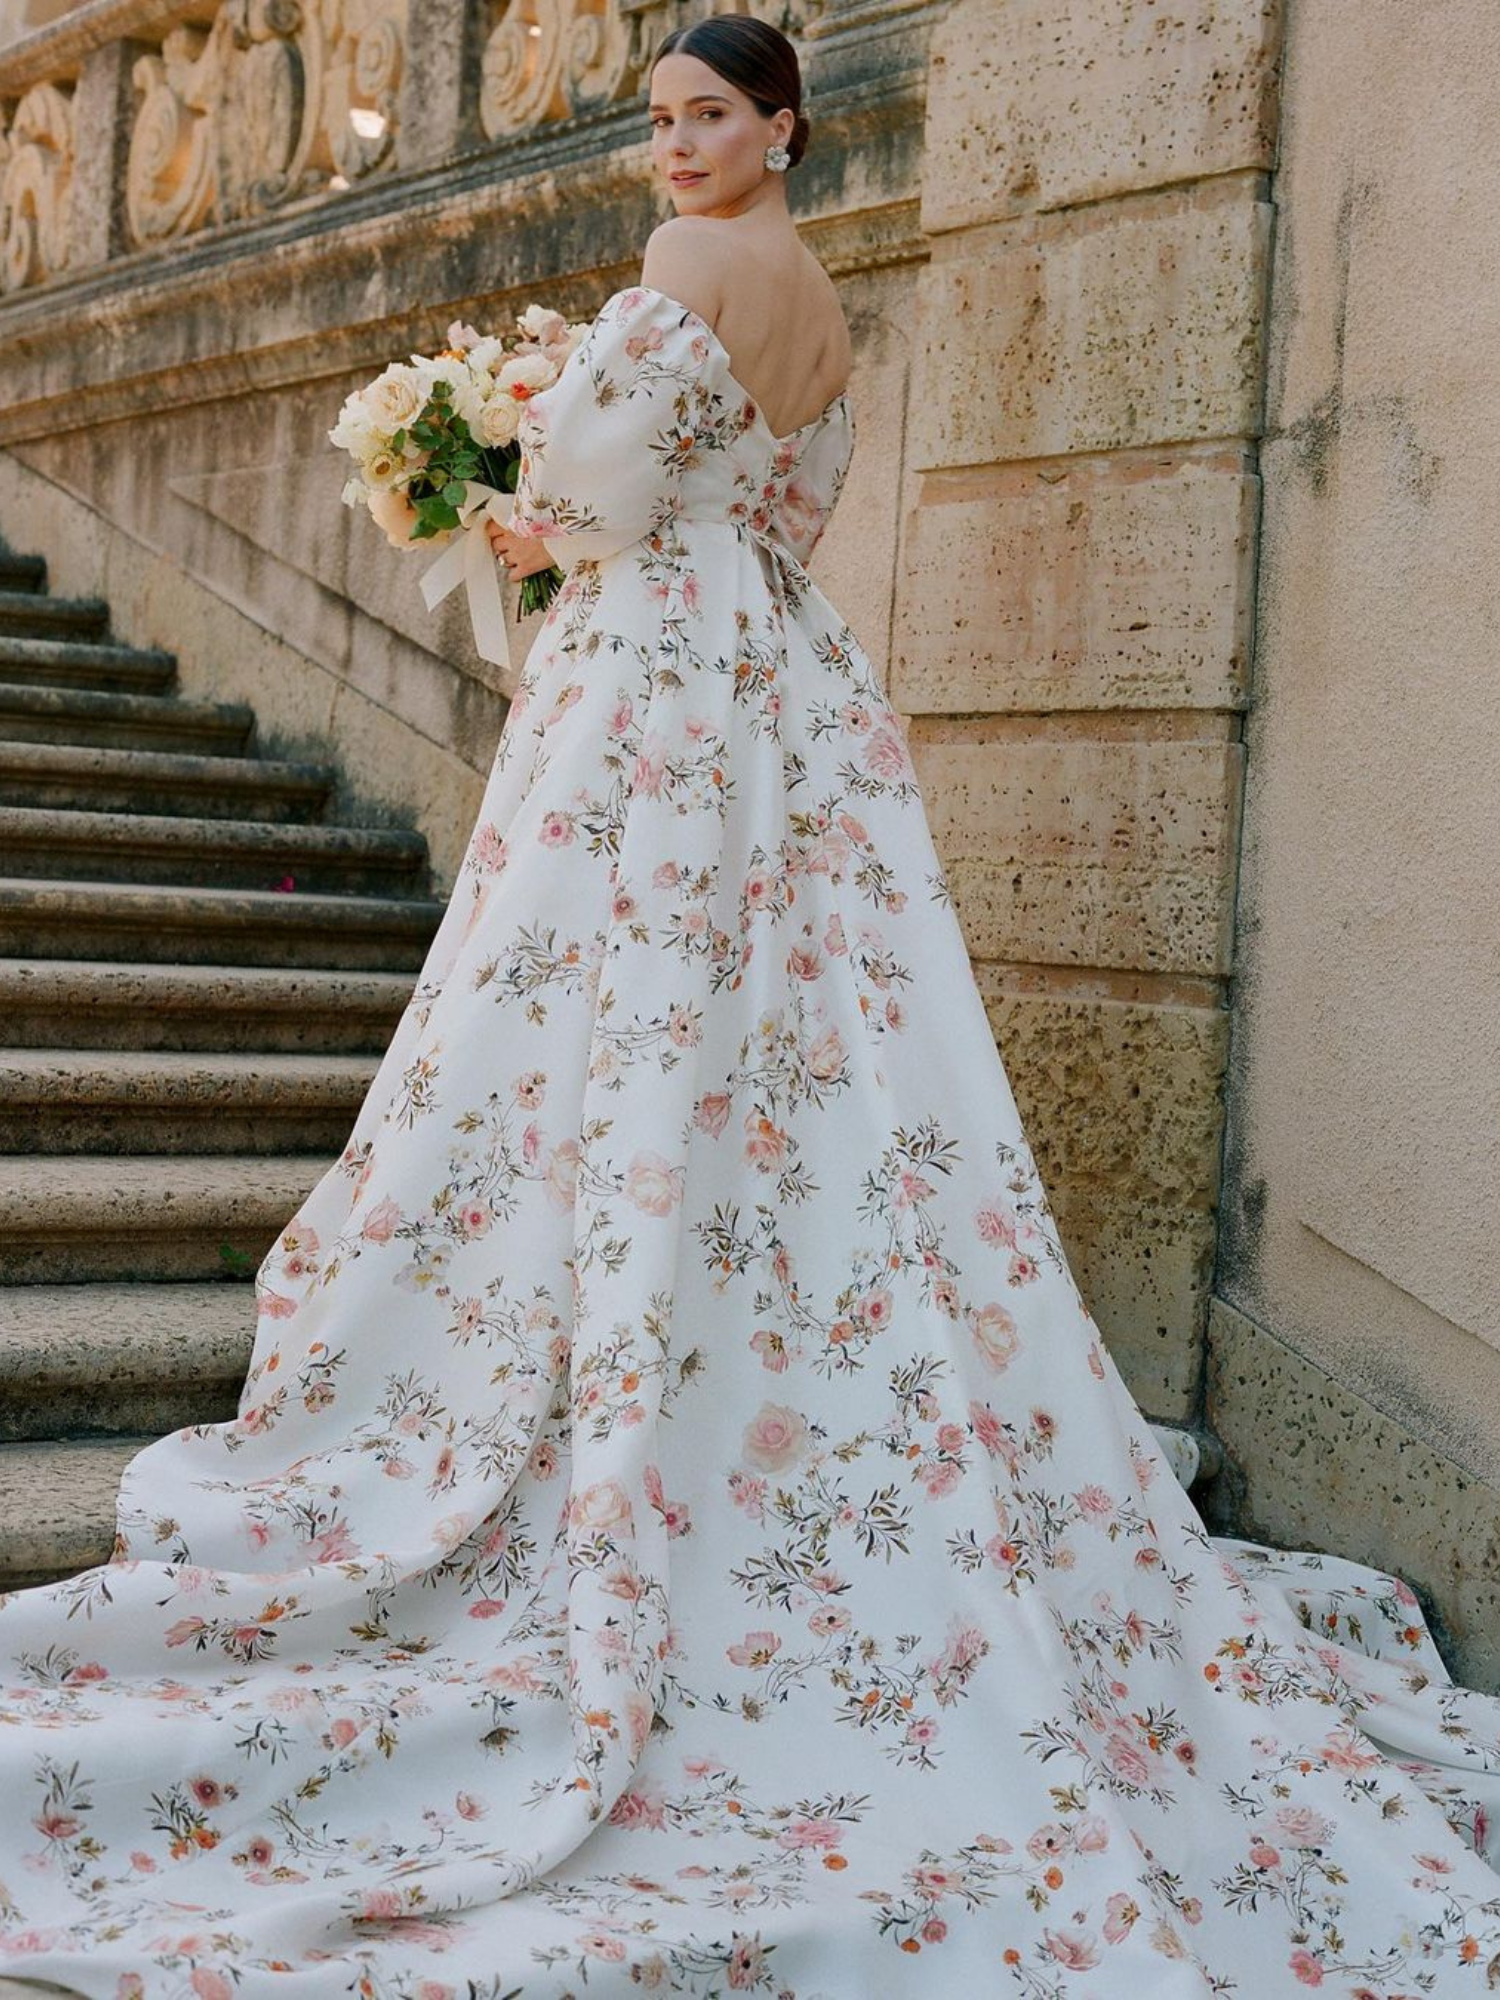 Sophia Bush's Wedding Dress